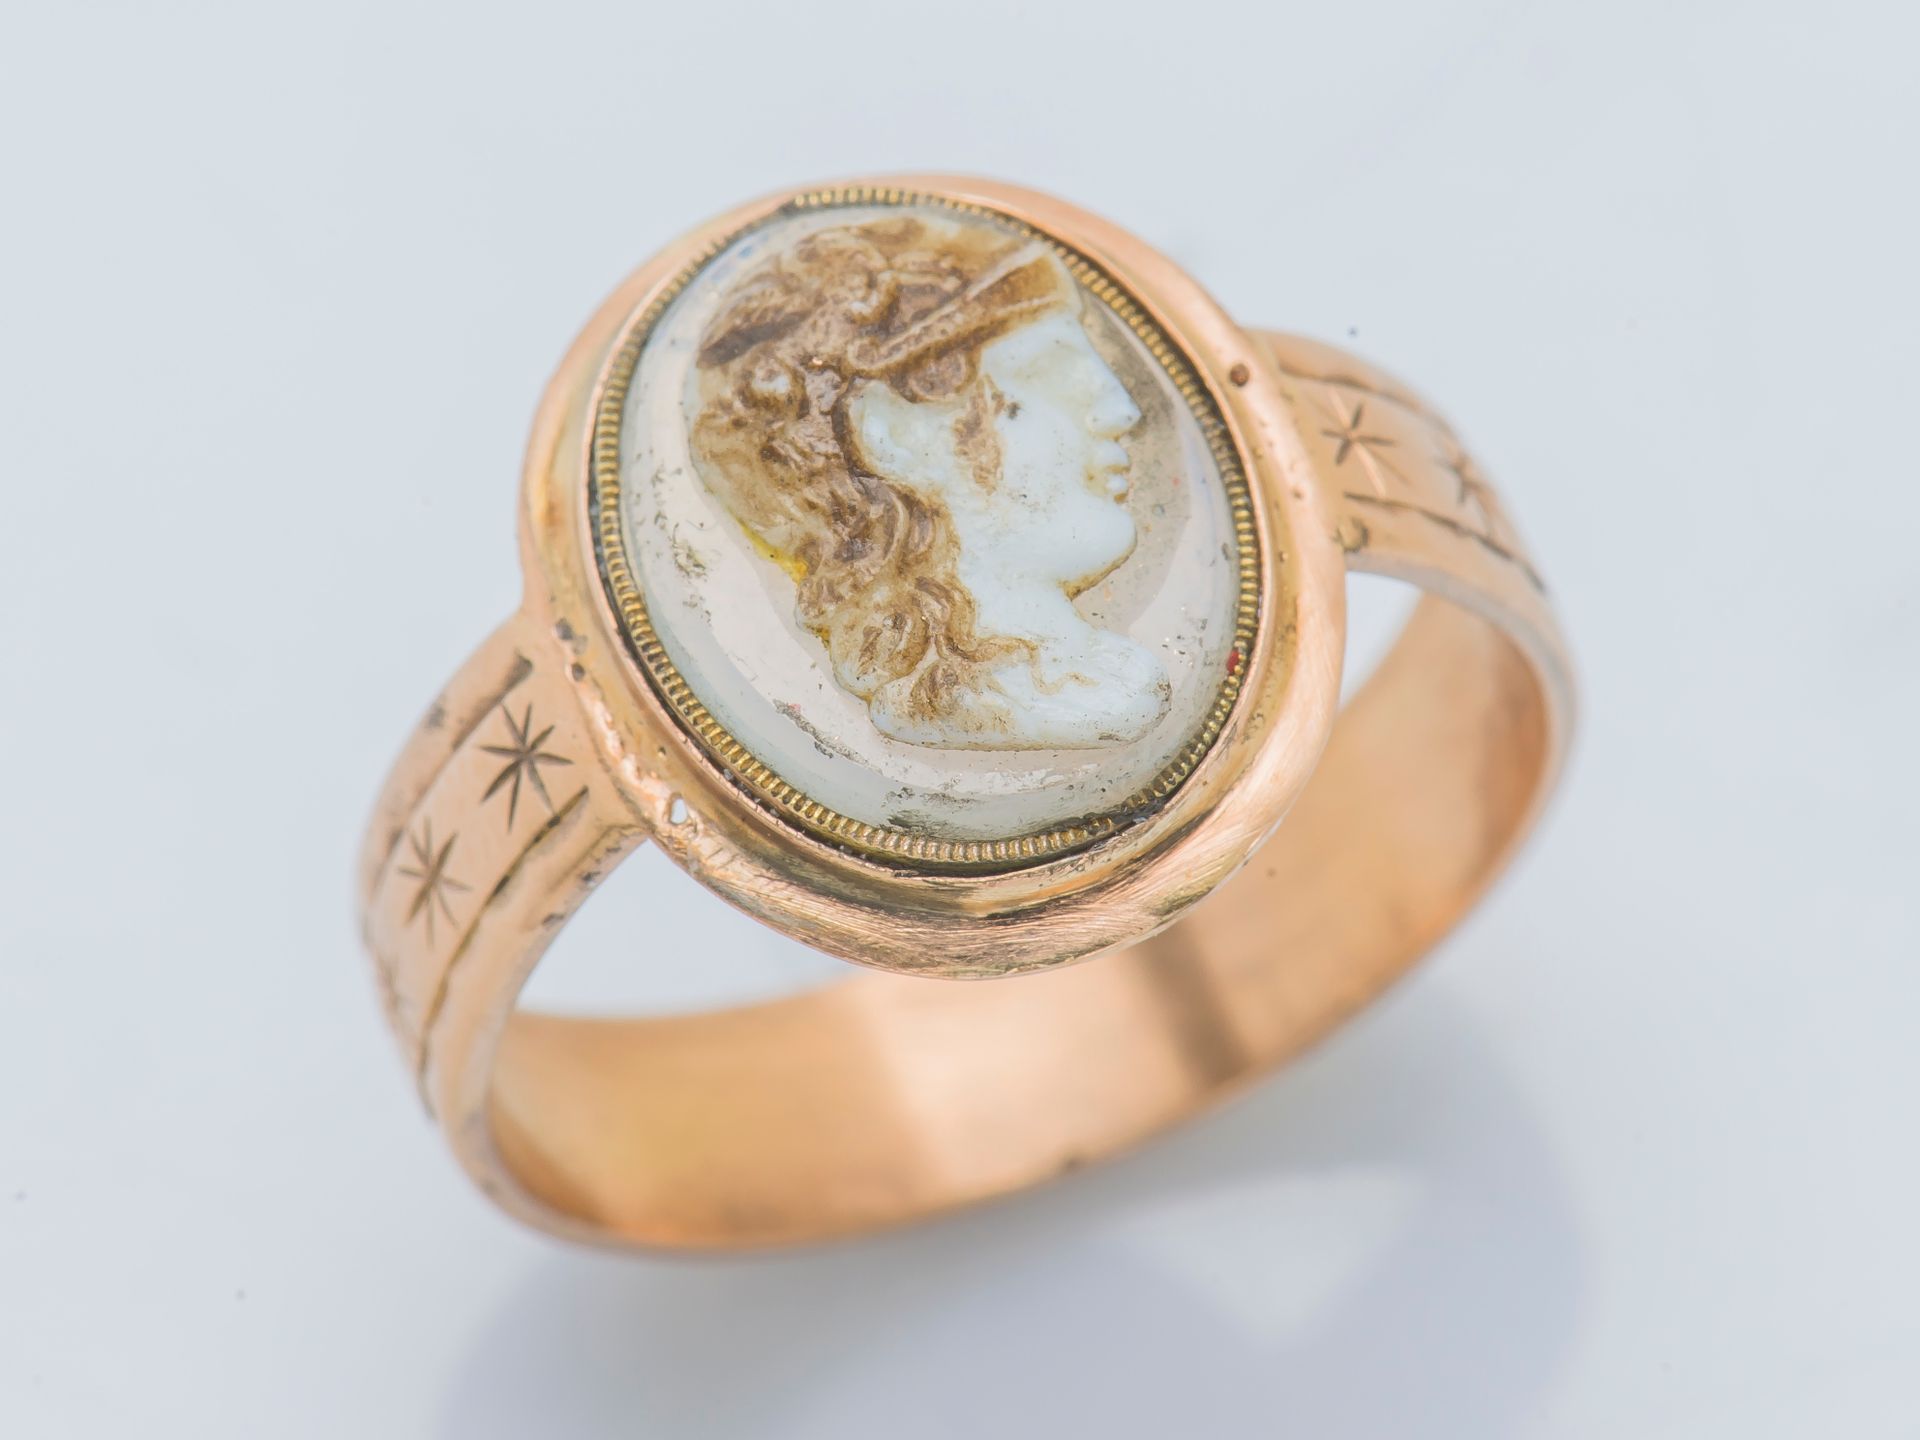 Null 一枚18K（750‰）黄金戒指，镶嵌着玛瑙上的浮雕，描绘着一个年轻人的轮廓，平坦的戒指上追逐着星星。

手指大小：毛重：5.1克